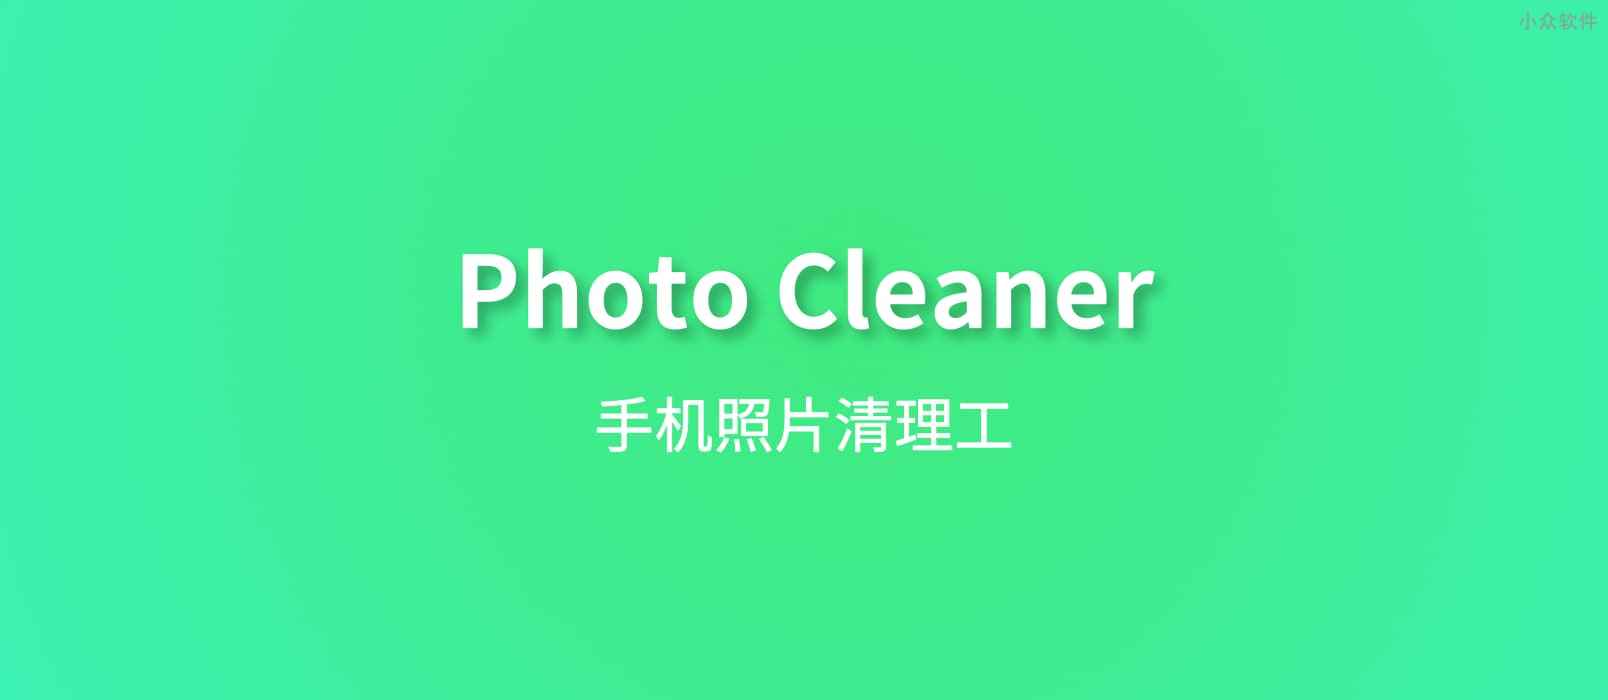 Photo Cleaner – 快速删除照片[iPhone/iPad 限免]